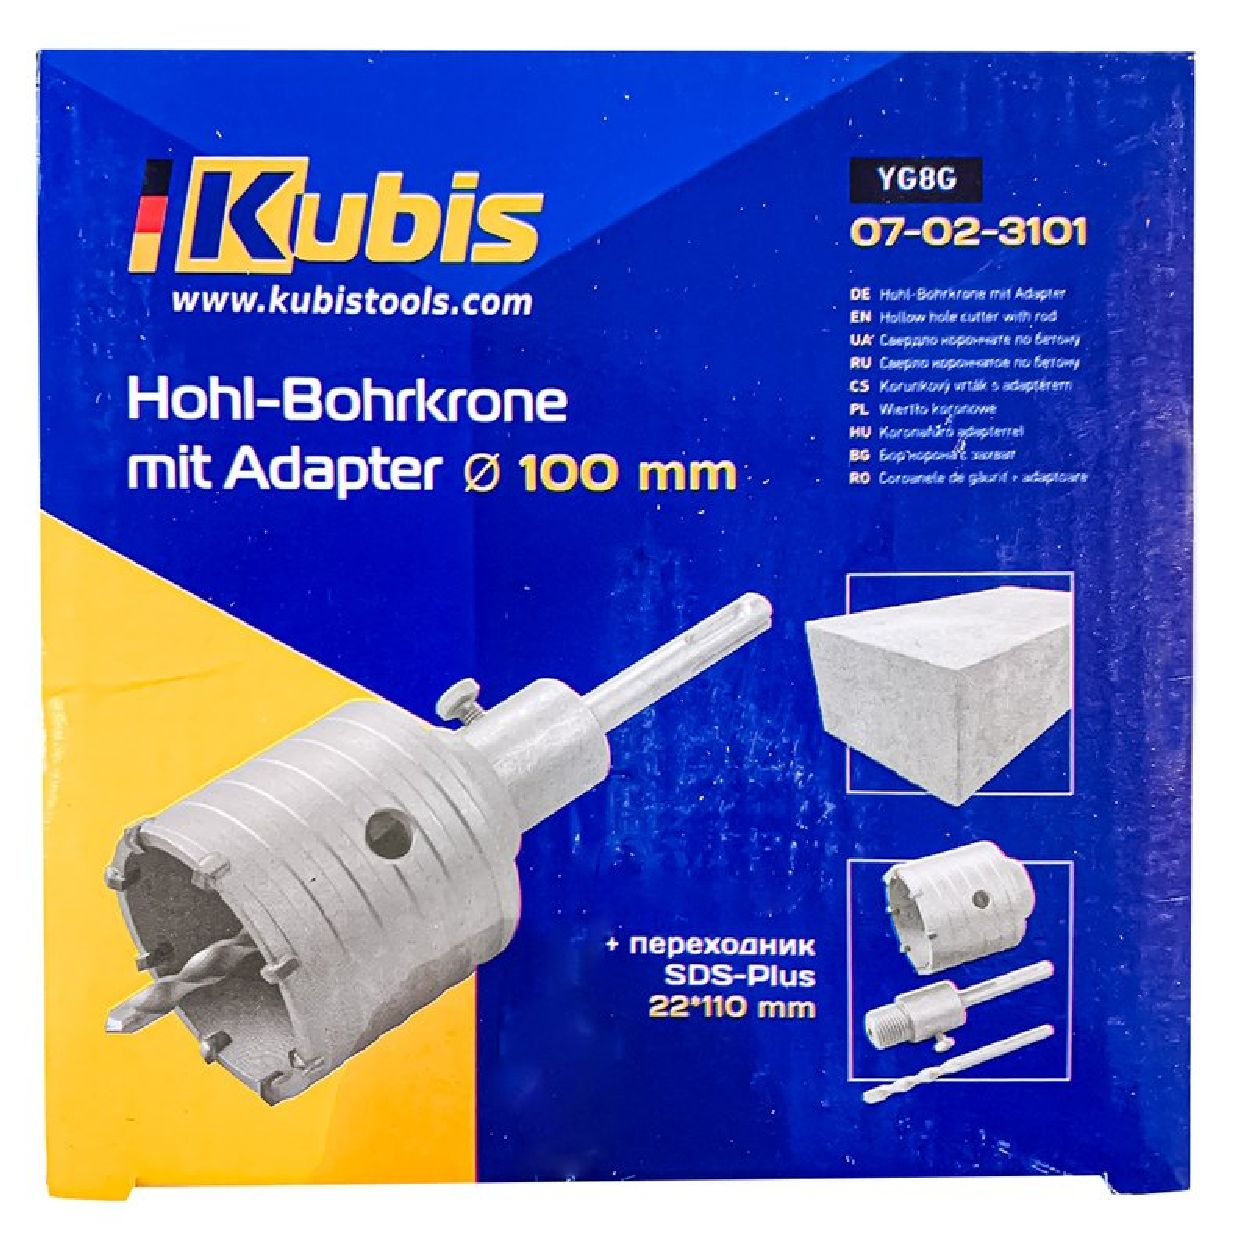 Multifunktionswerkzeug, Transparent / Hohl-Bohrkrone KB07-02-3101 KUBIS INBUSCO